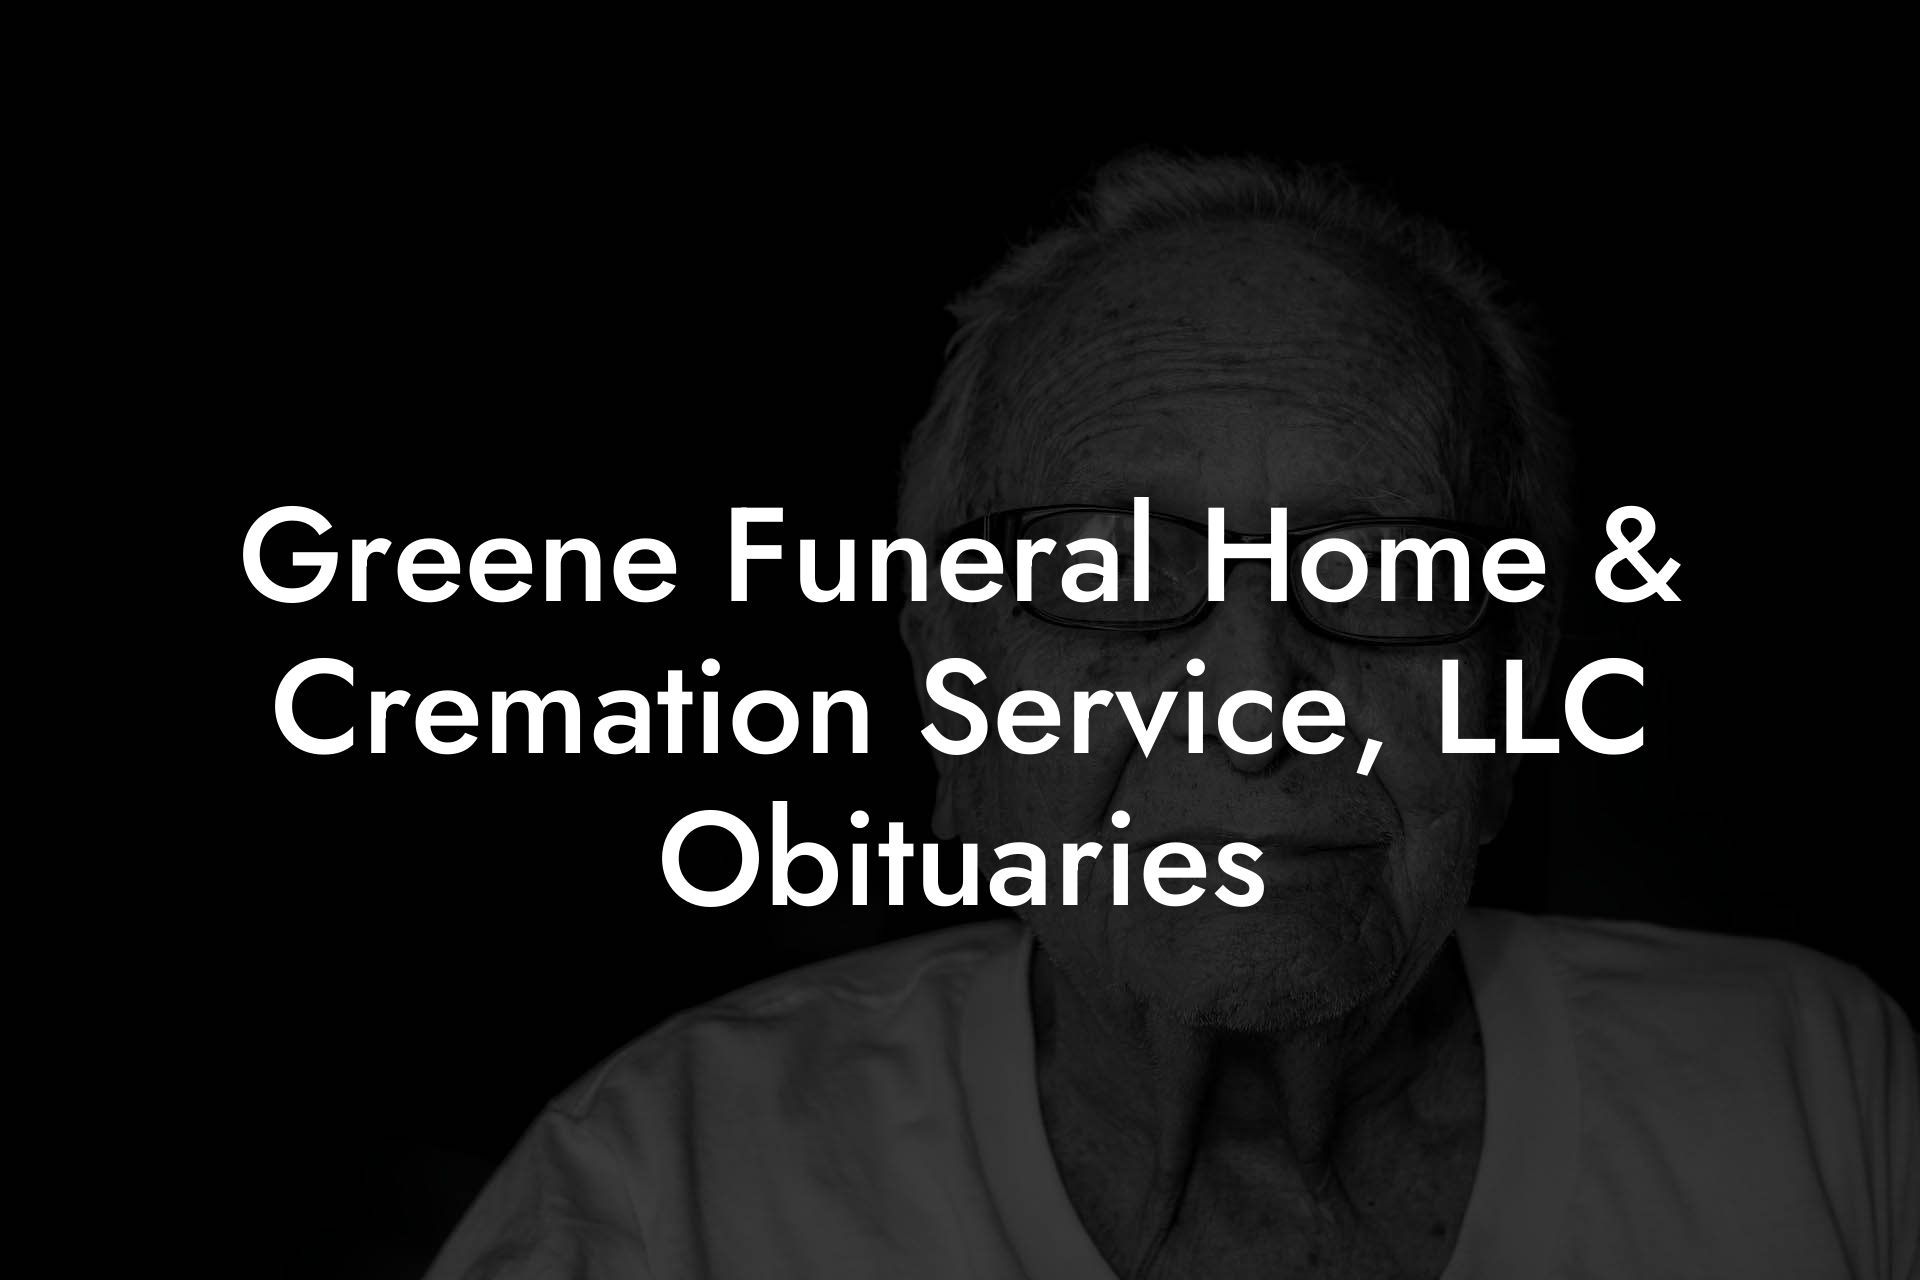 Greene Funeral Home & Cremation Service, LLC Obituaries